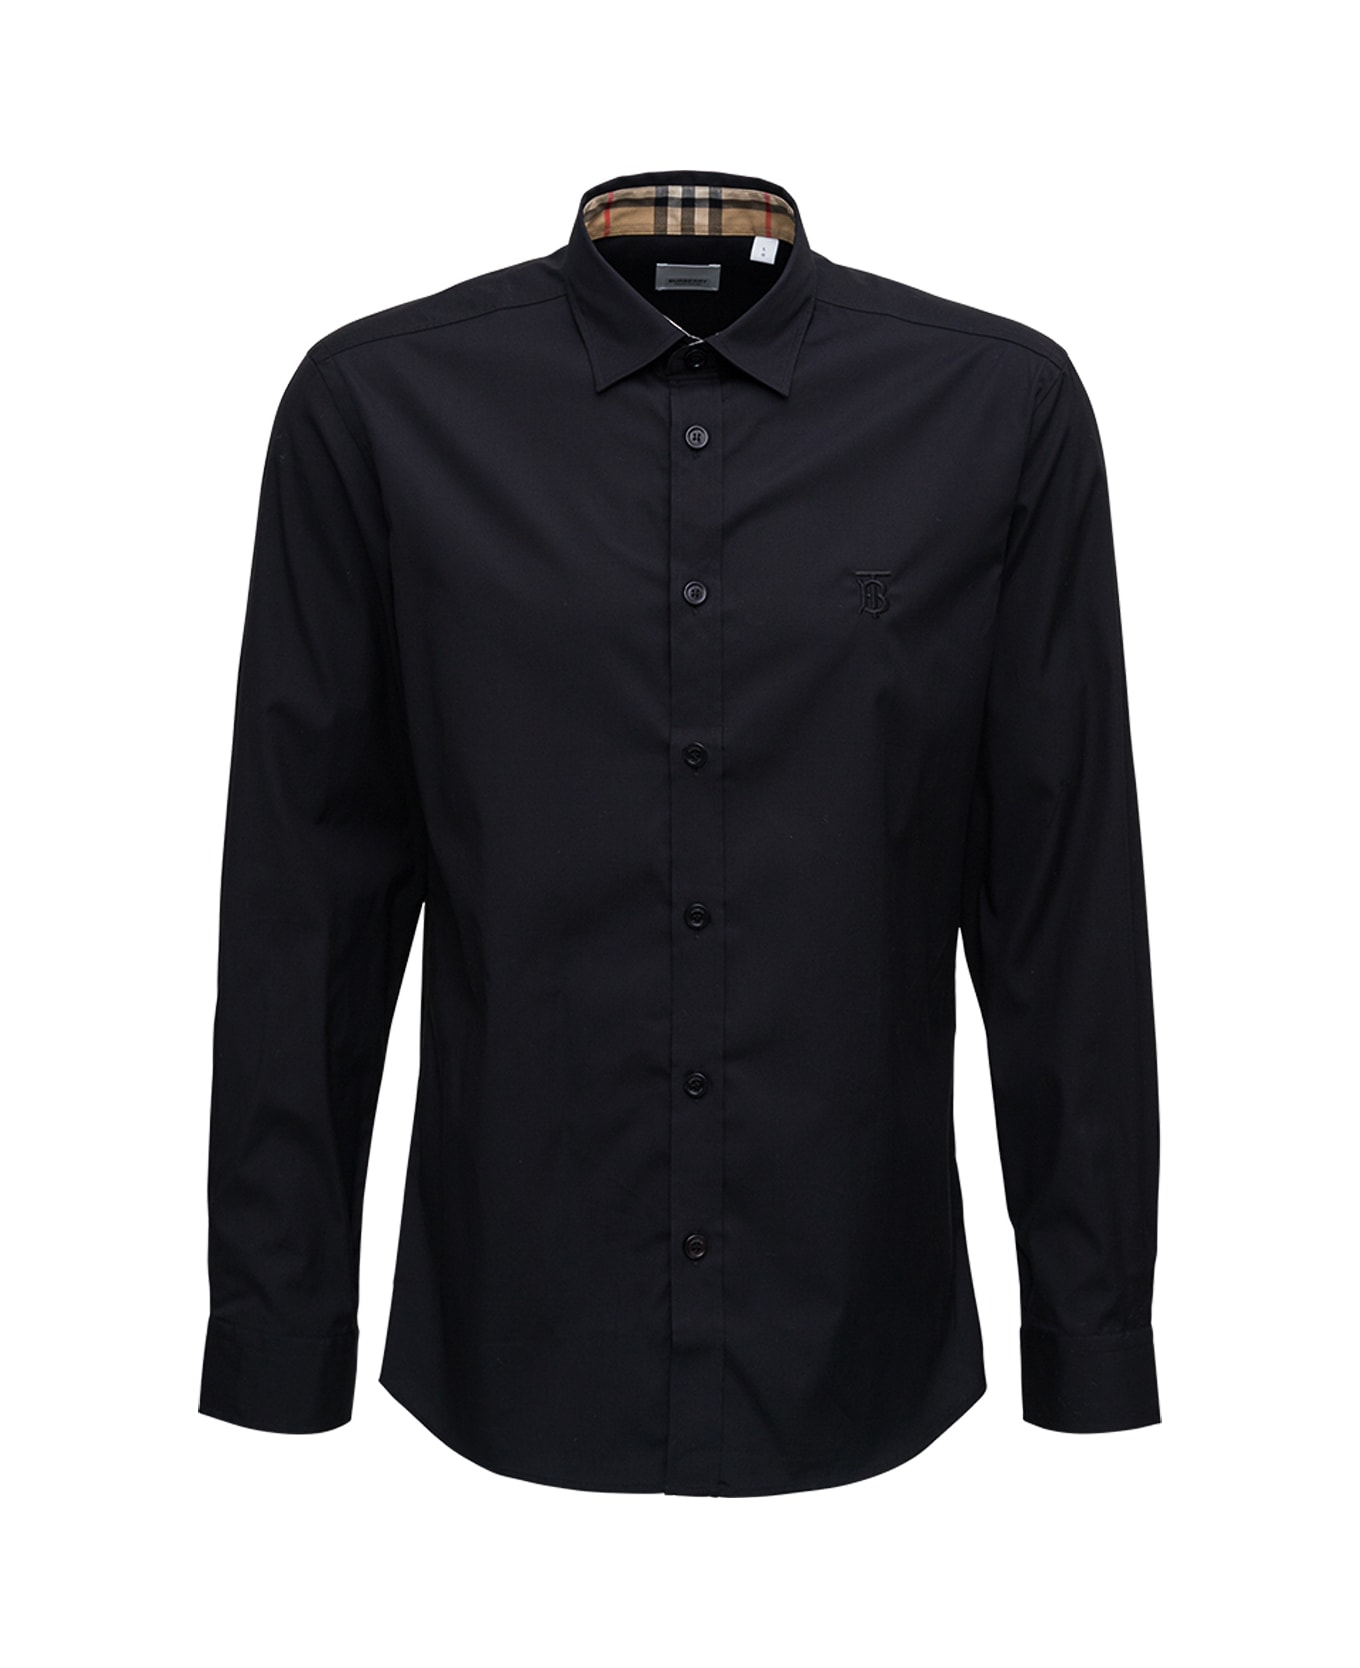 Burberry Man's Black Cotton Polin Shirt With Logo - Black シャツ